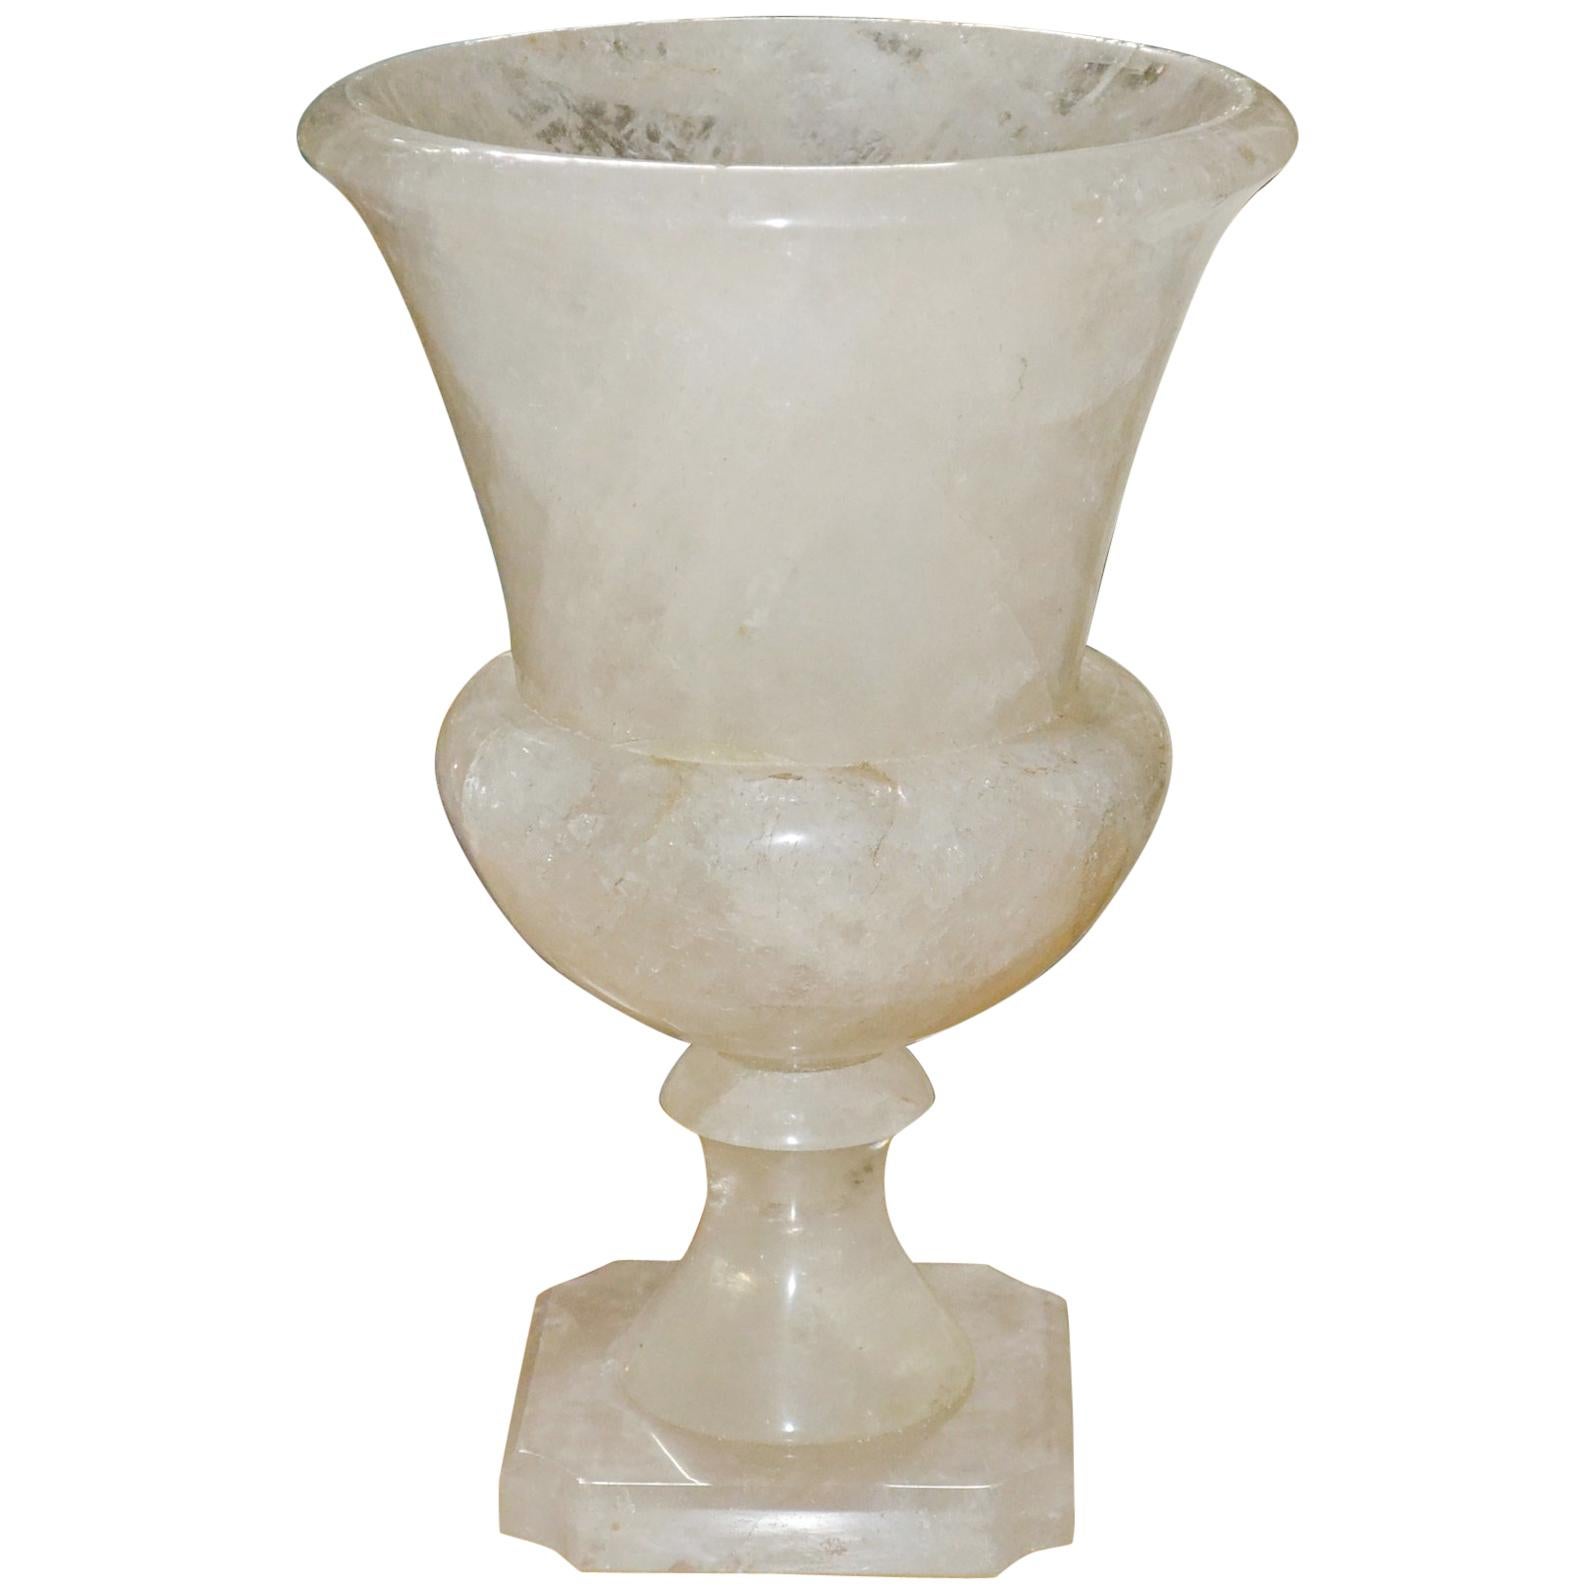 Brazilian Rock Crystal Vase